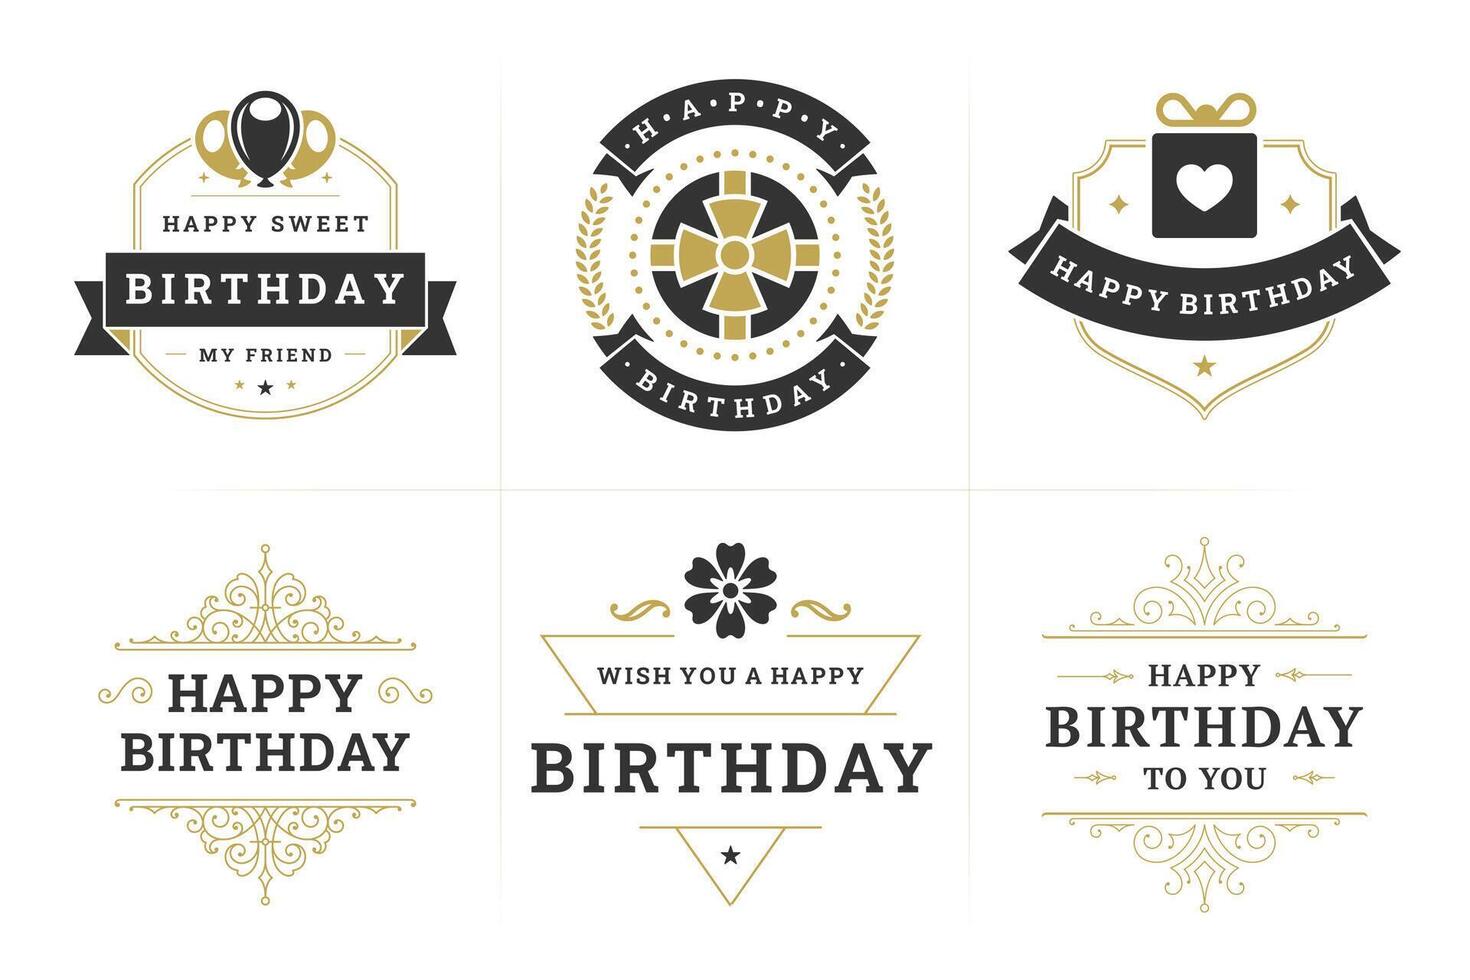 Happy birthday black golden fashion vintage label and badge set for greeting card design flat vector